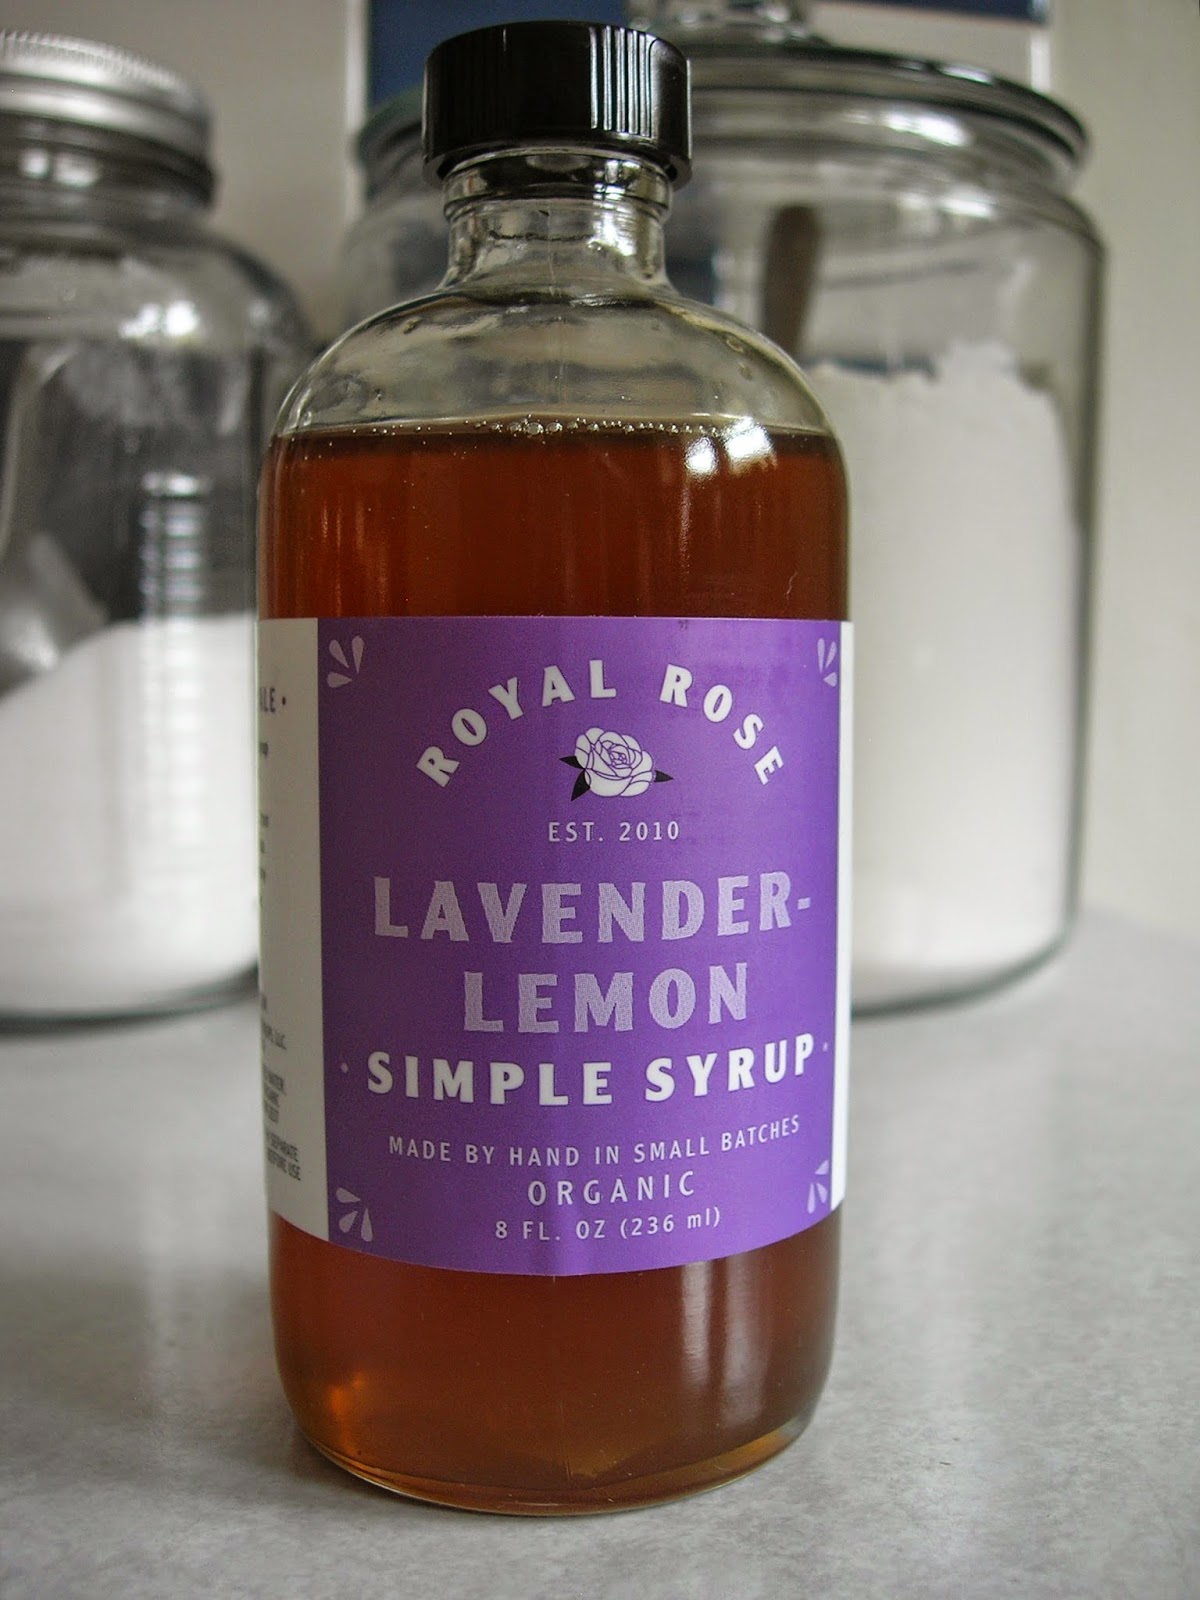 My Little Bungalow: Royal Rose Lavender-Lemon Simple Syrup